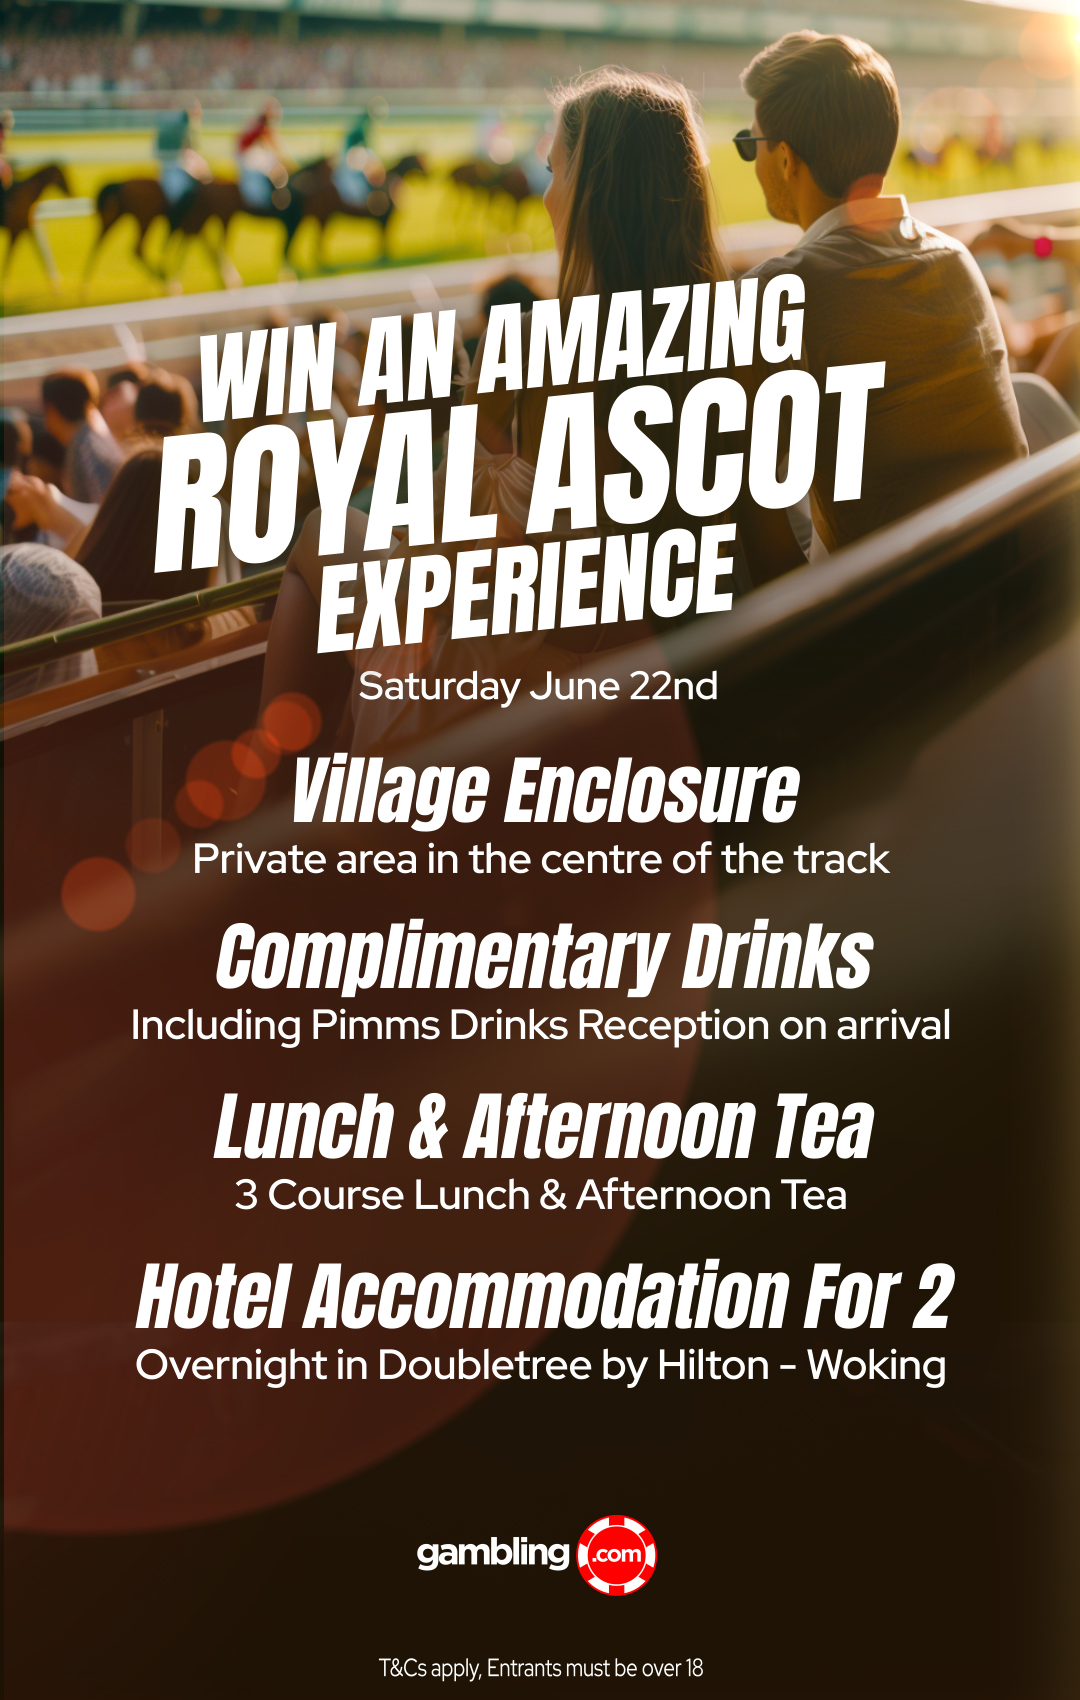 Win a trip to Royal Ascot with Gambling.com